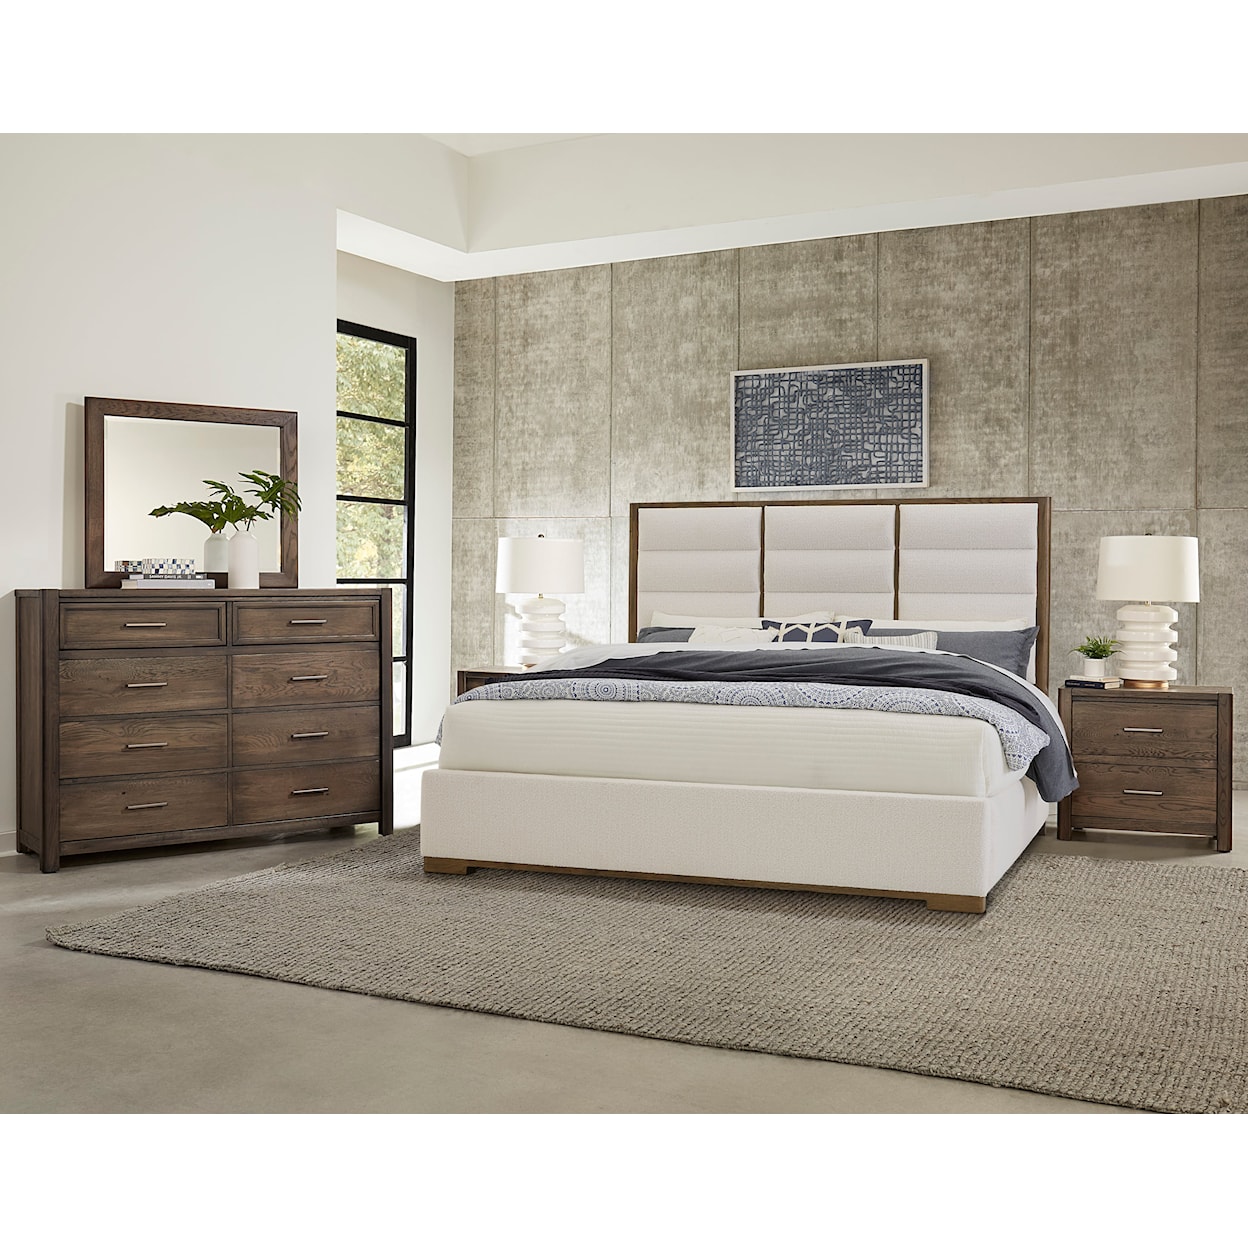 Vaughan-Bassett Charter Oak Queen Upholstered Bedroom Set